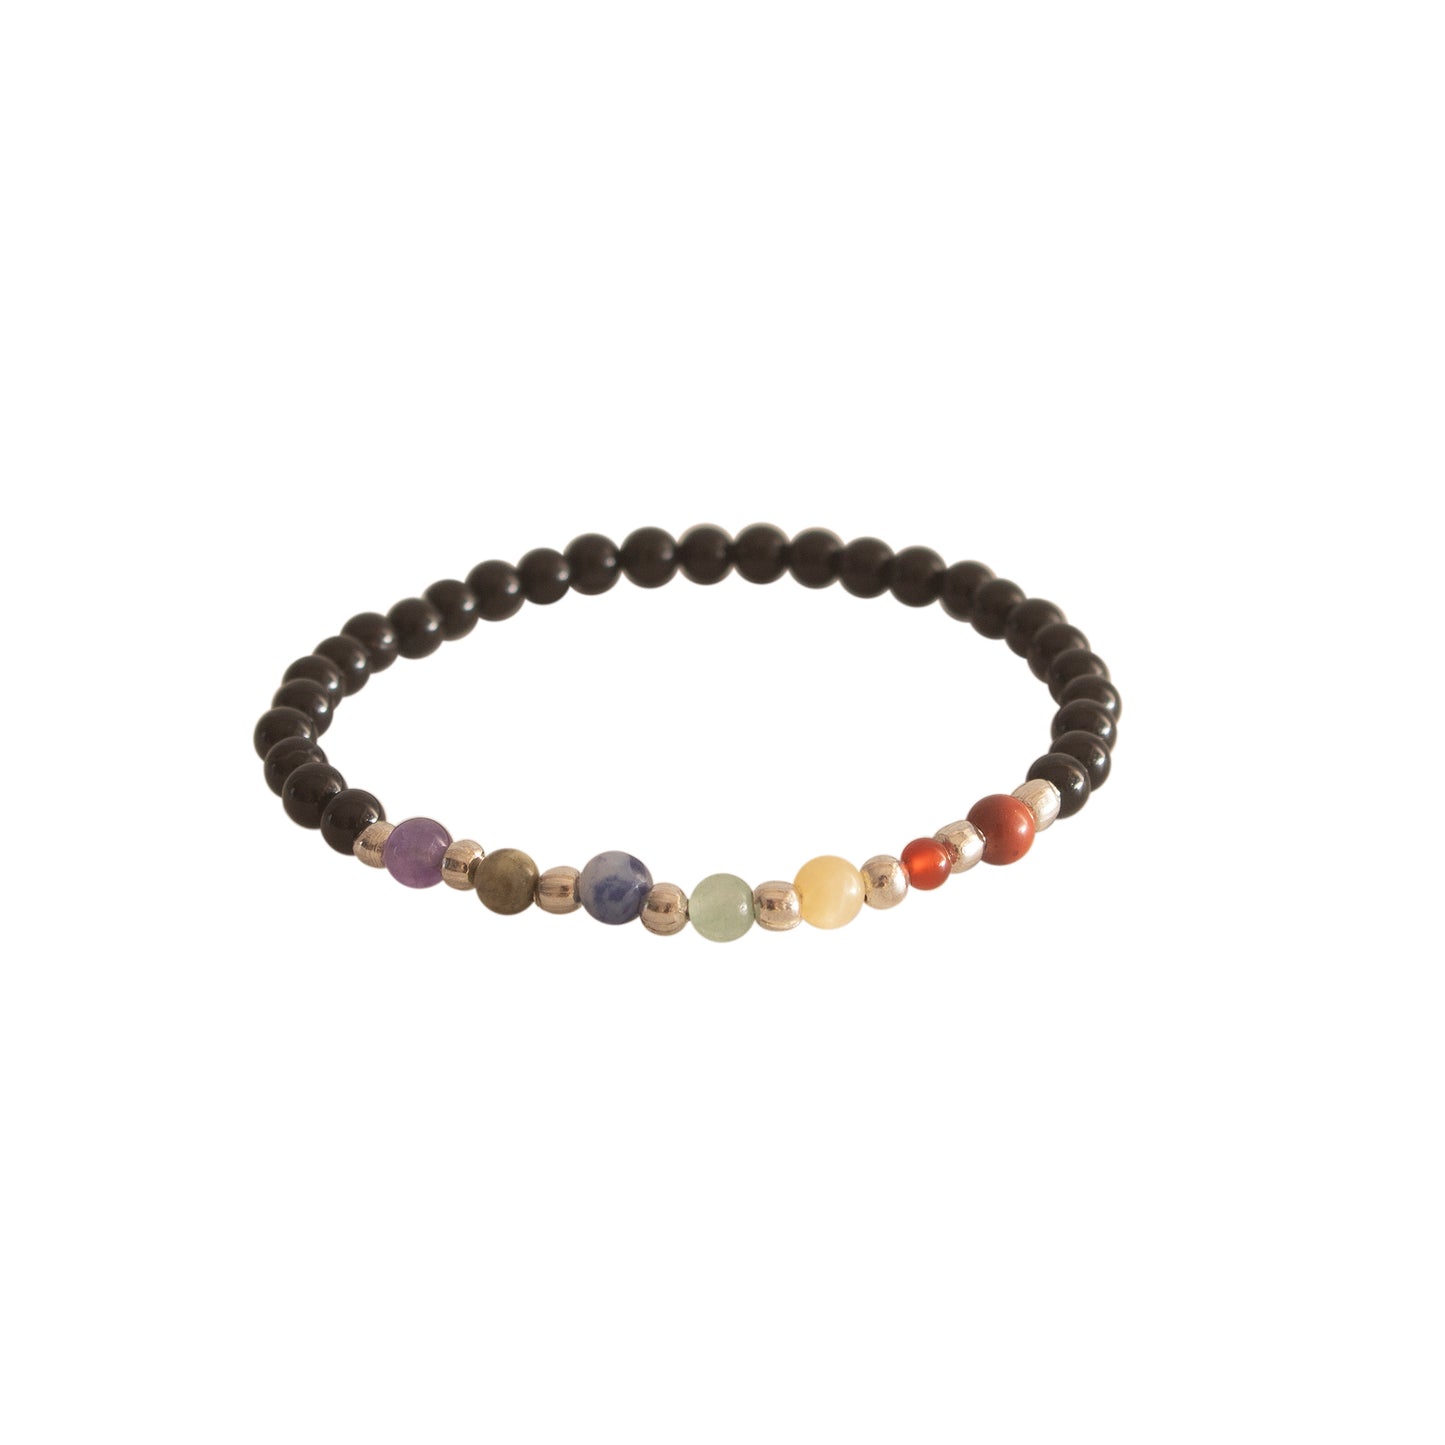 Seven Chakra Bracelet with Black Tourmaline 4mm Beads